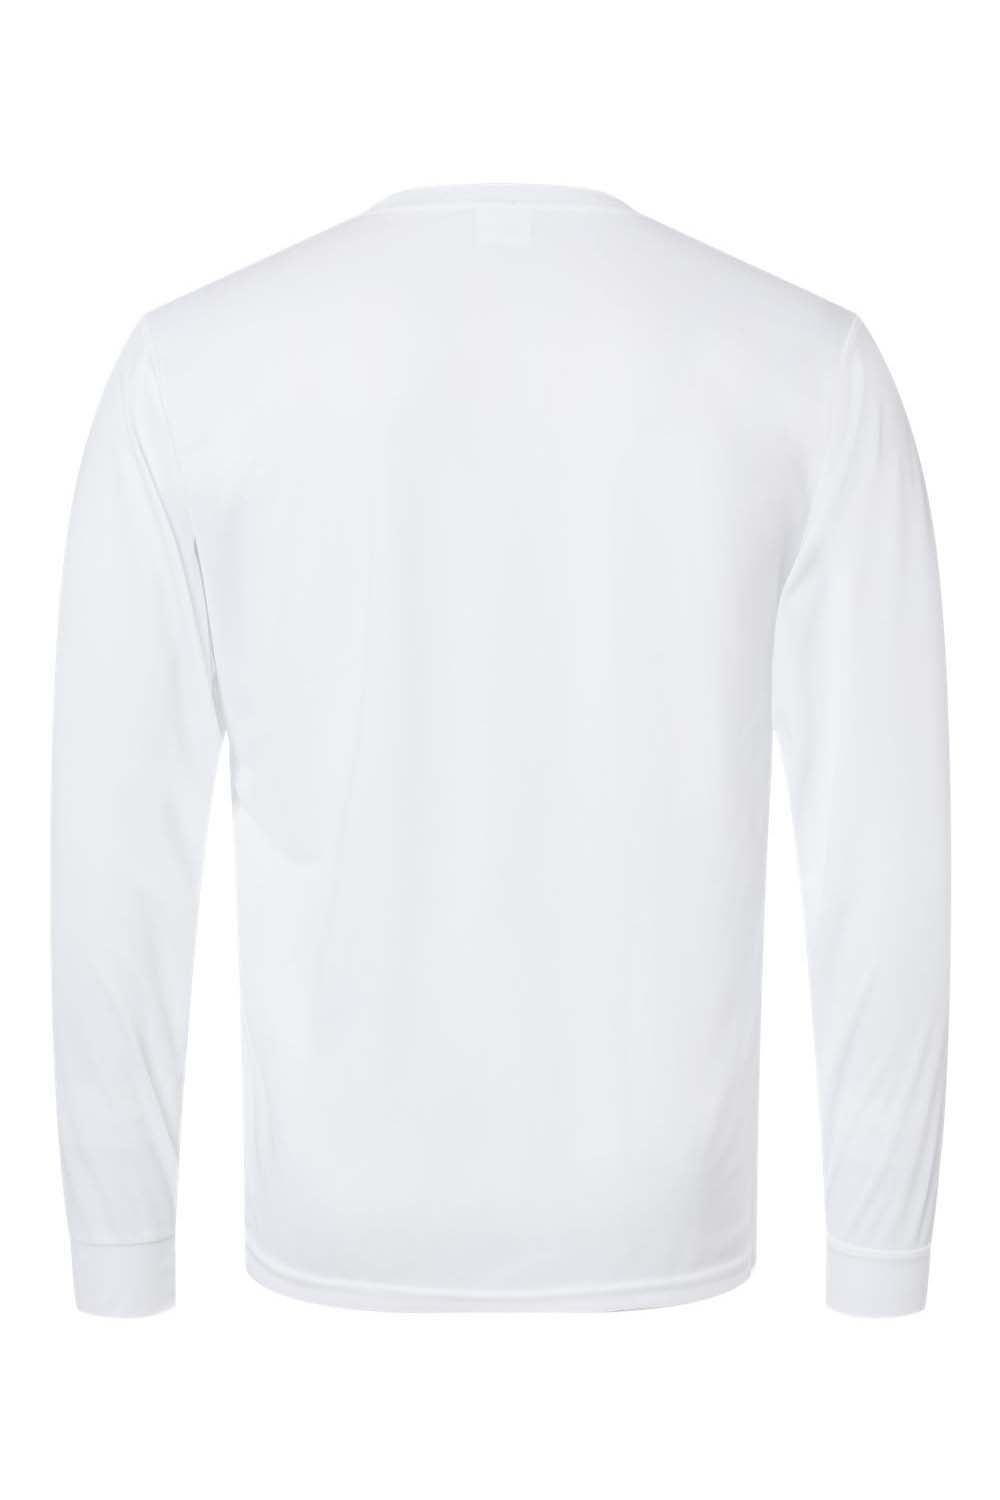 Augusta Sportswear 788 Mens Moisture Wicking Long Sleeve Crewneck T-Shirt White Model Flat Back